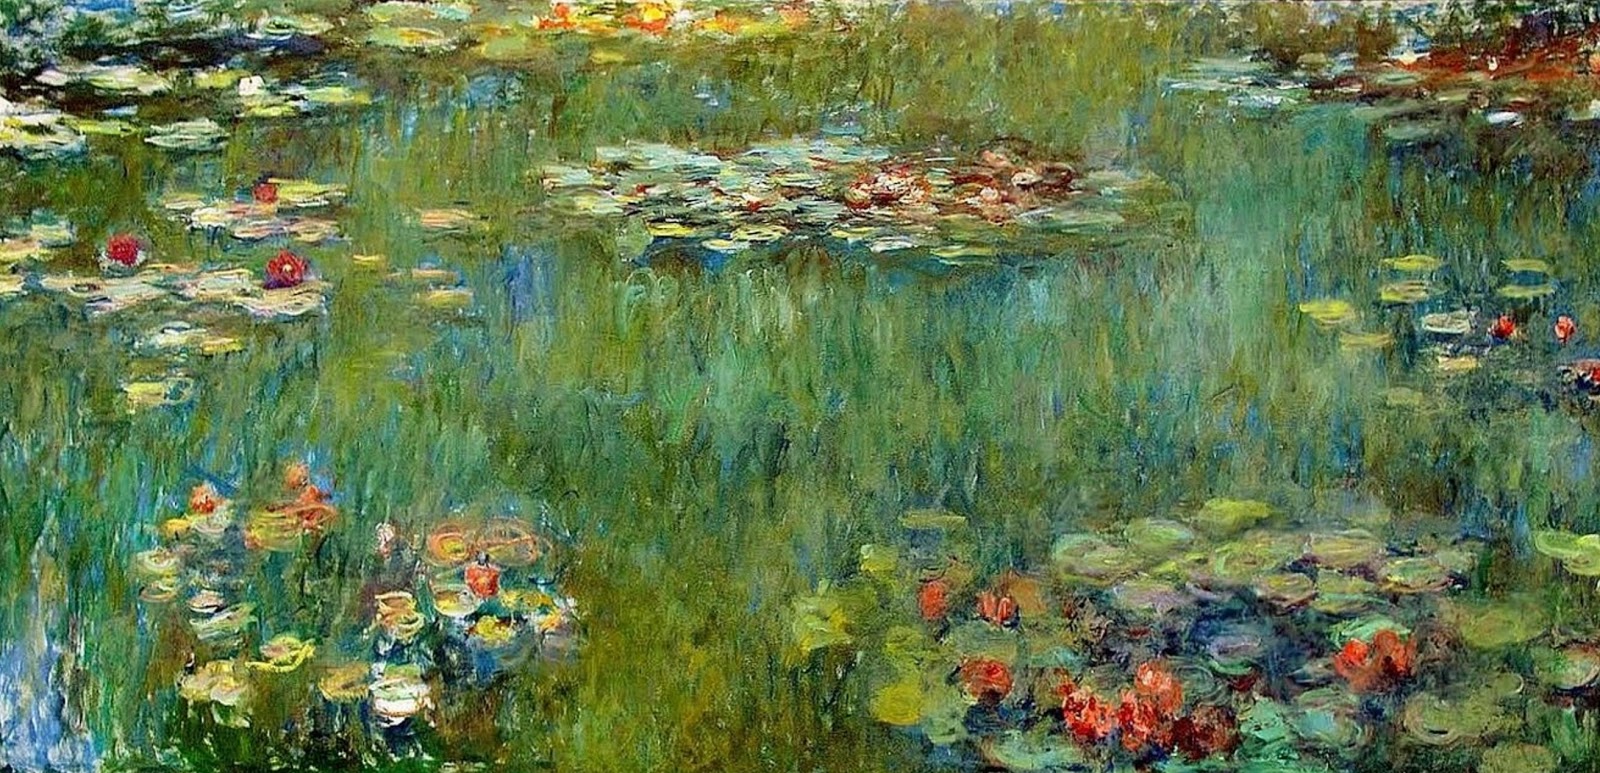 Claude+Monet-1840-1926 (888).jpg